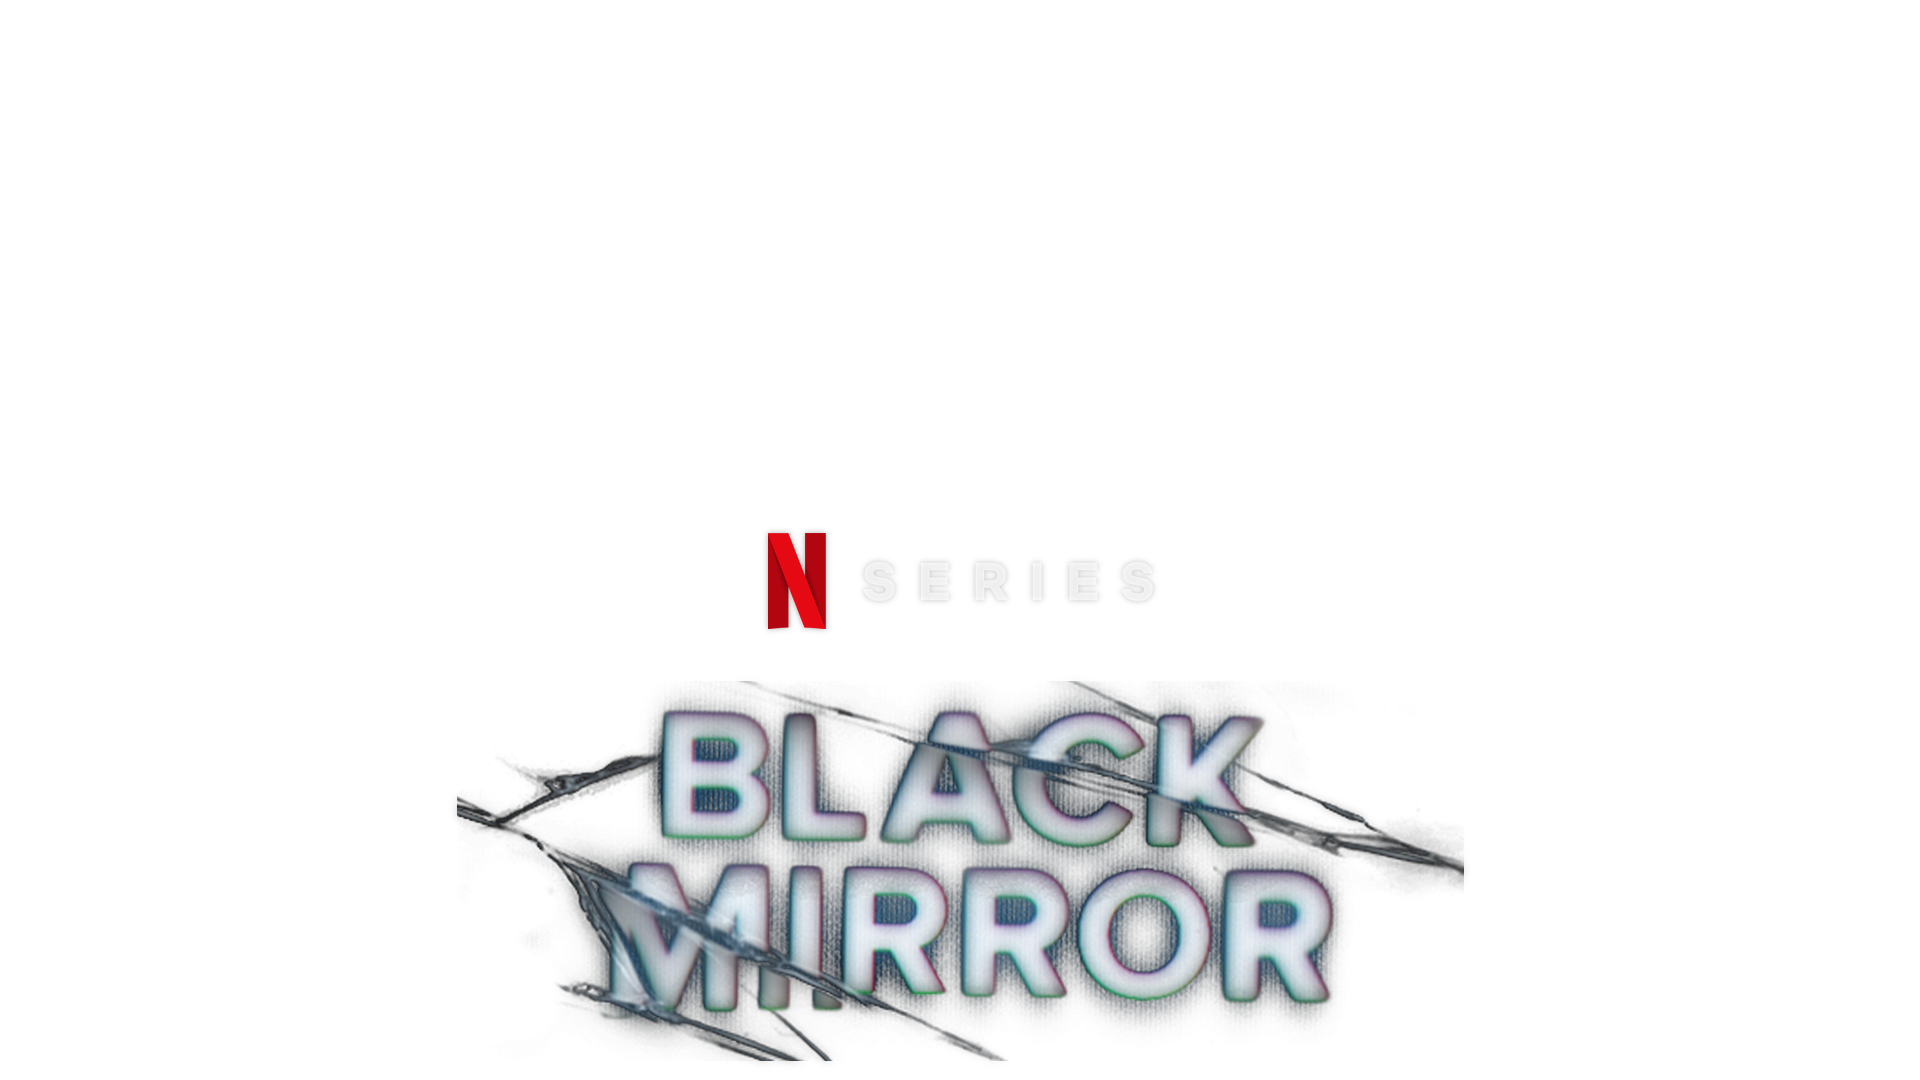 Black Mirror Casts Salma Hayek Pinault and Annie Murphy - PAPER